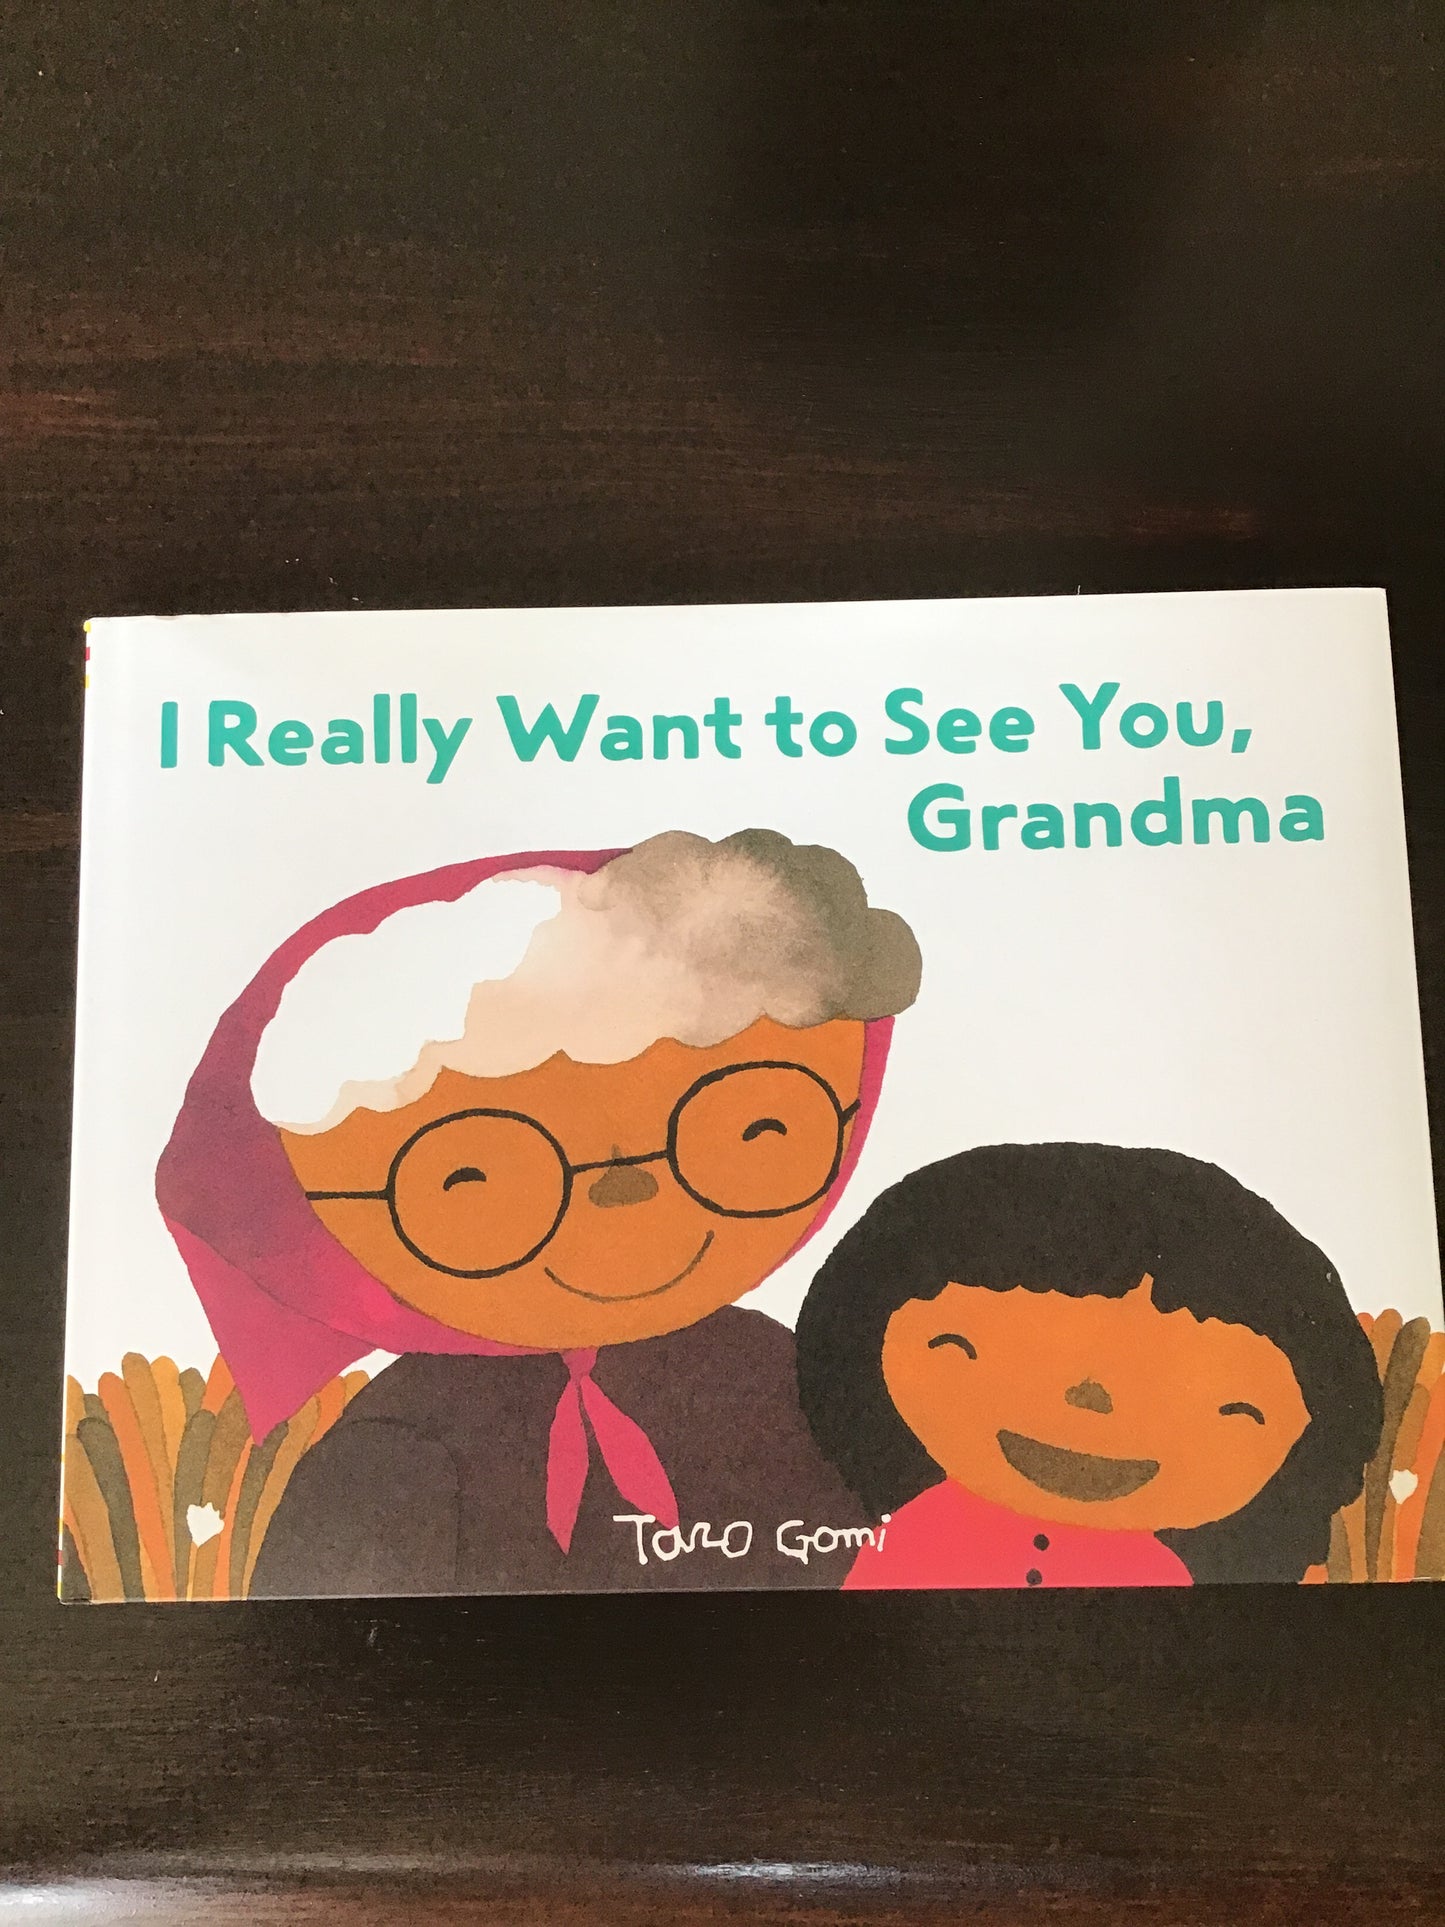 I Really Want to See You, Grandma